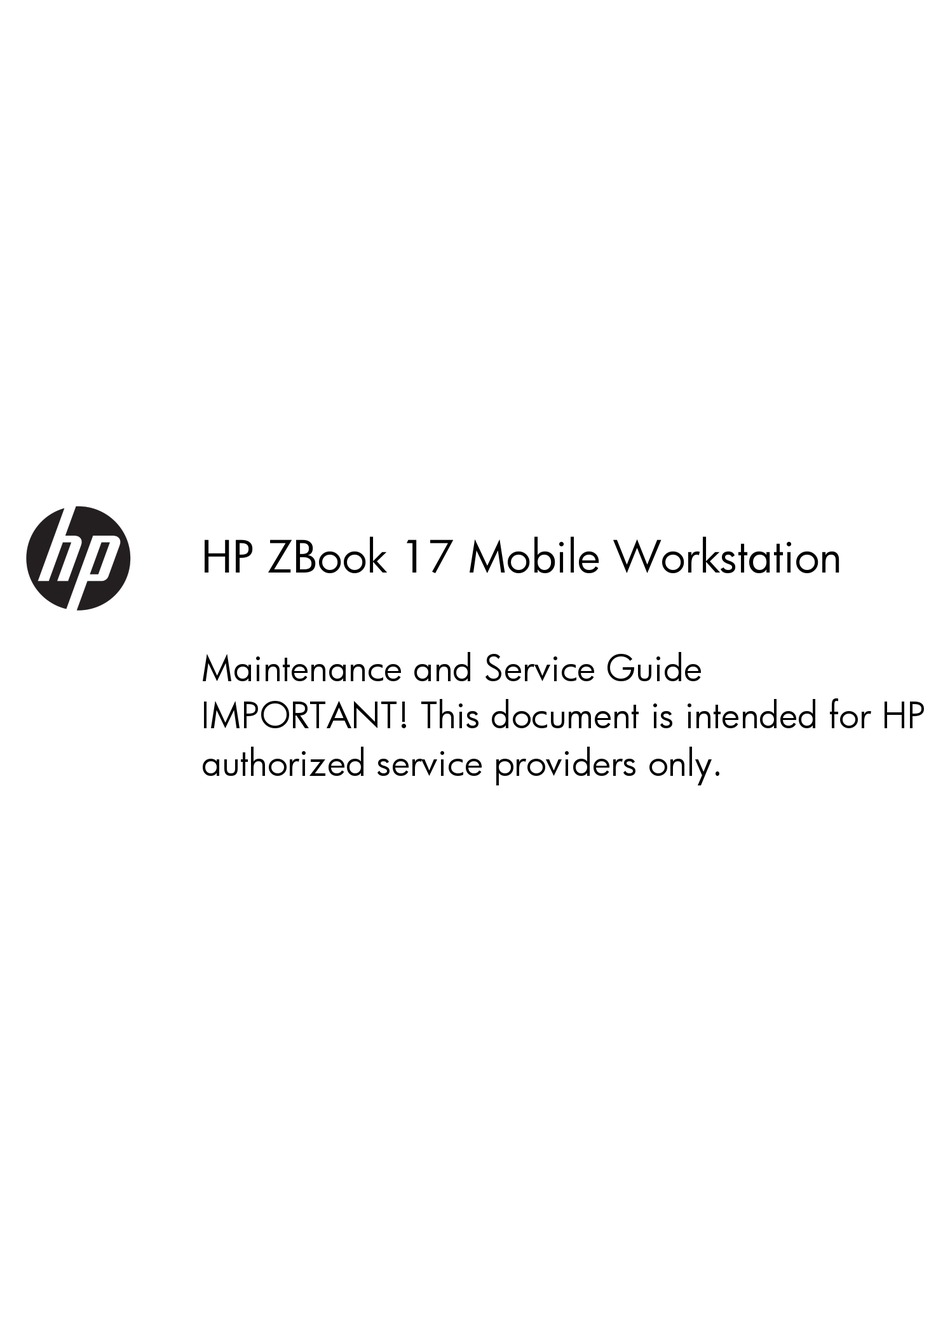 HP ZBOOK 17 SERVICE MANUAL Pdf Download | ManualsLib